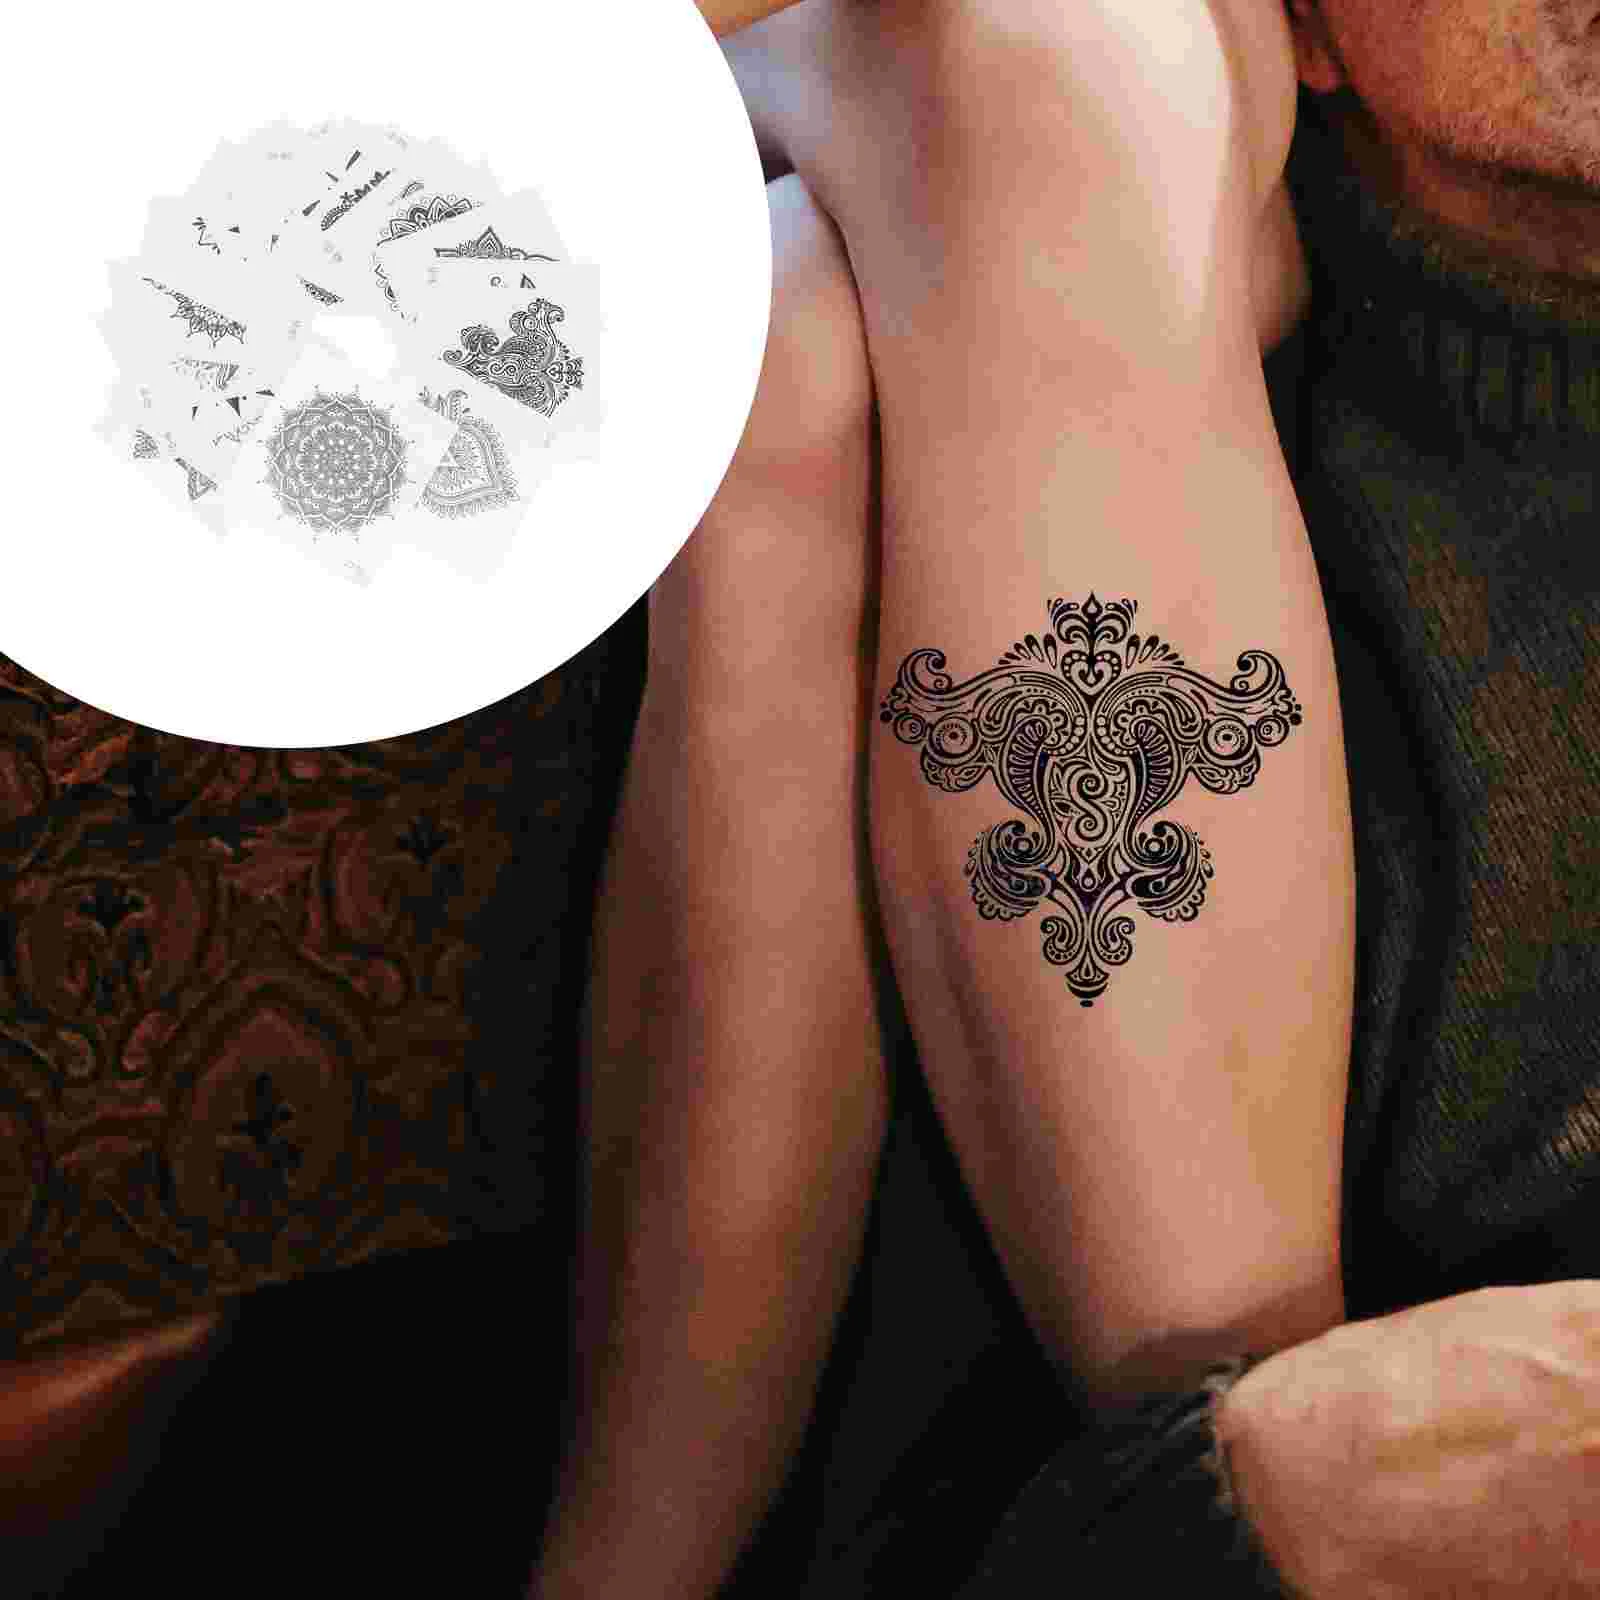 

20 Pcs Stickers Waterproof Tattoo Temporary Tattoos Decal Mandala Flower Floral Decals